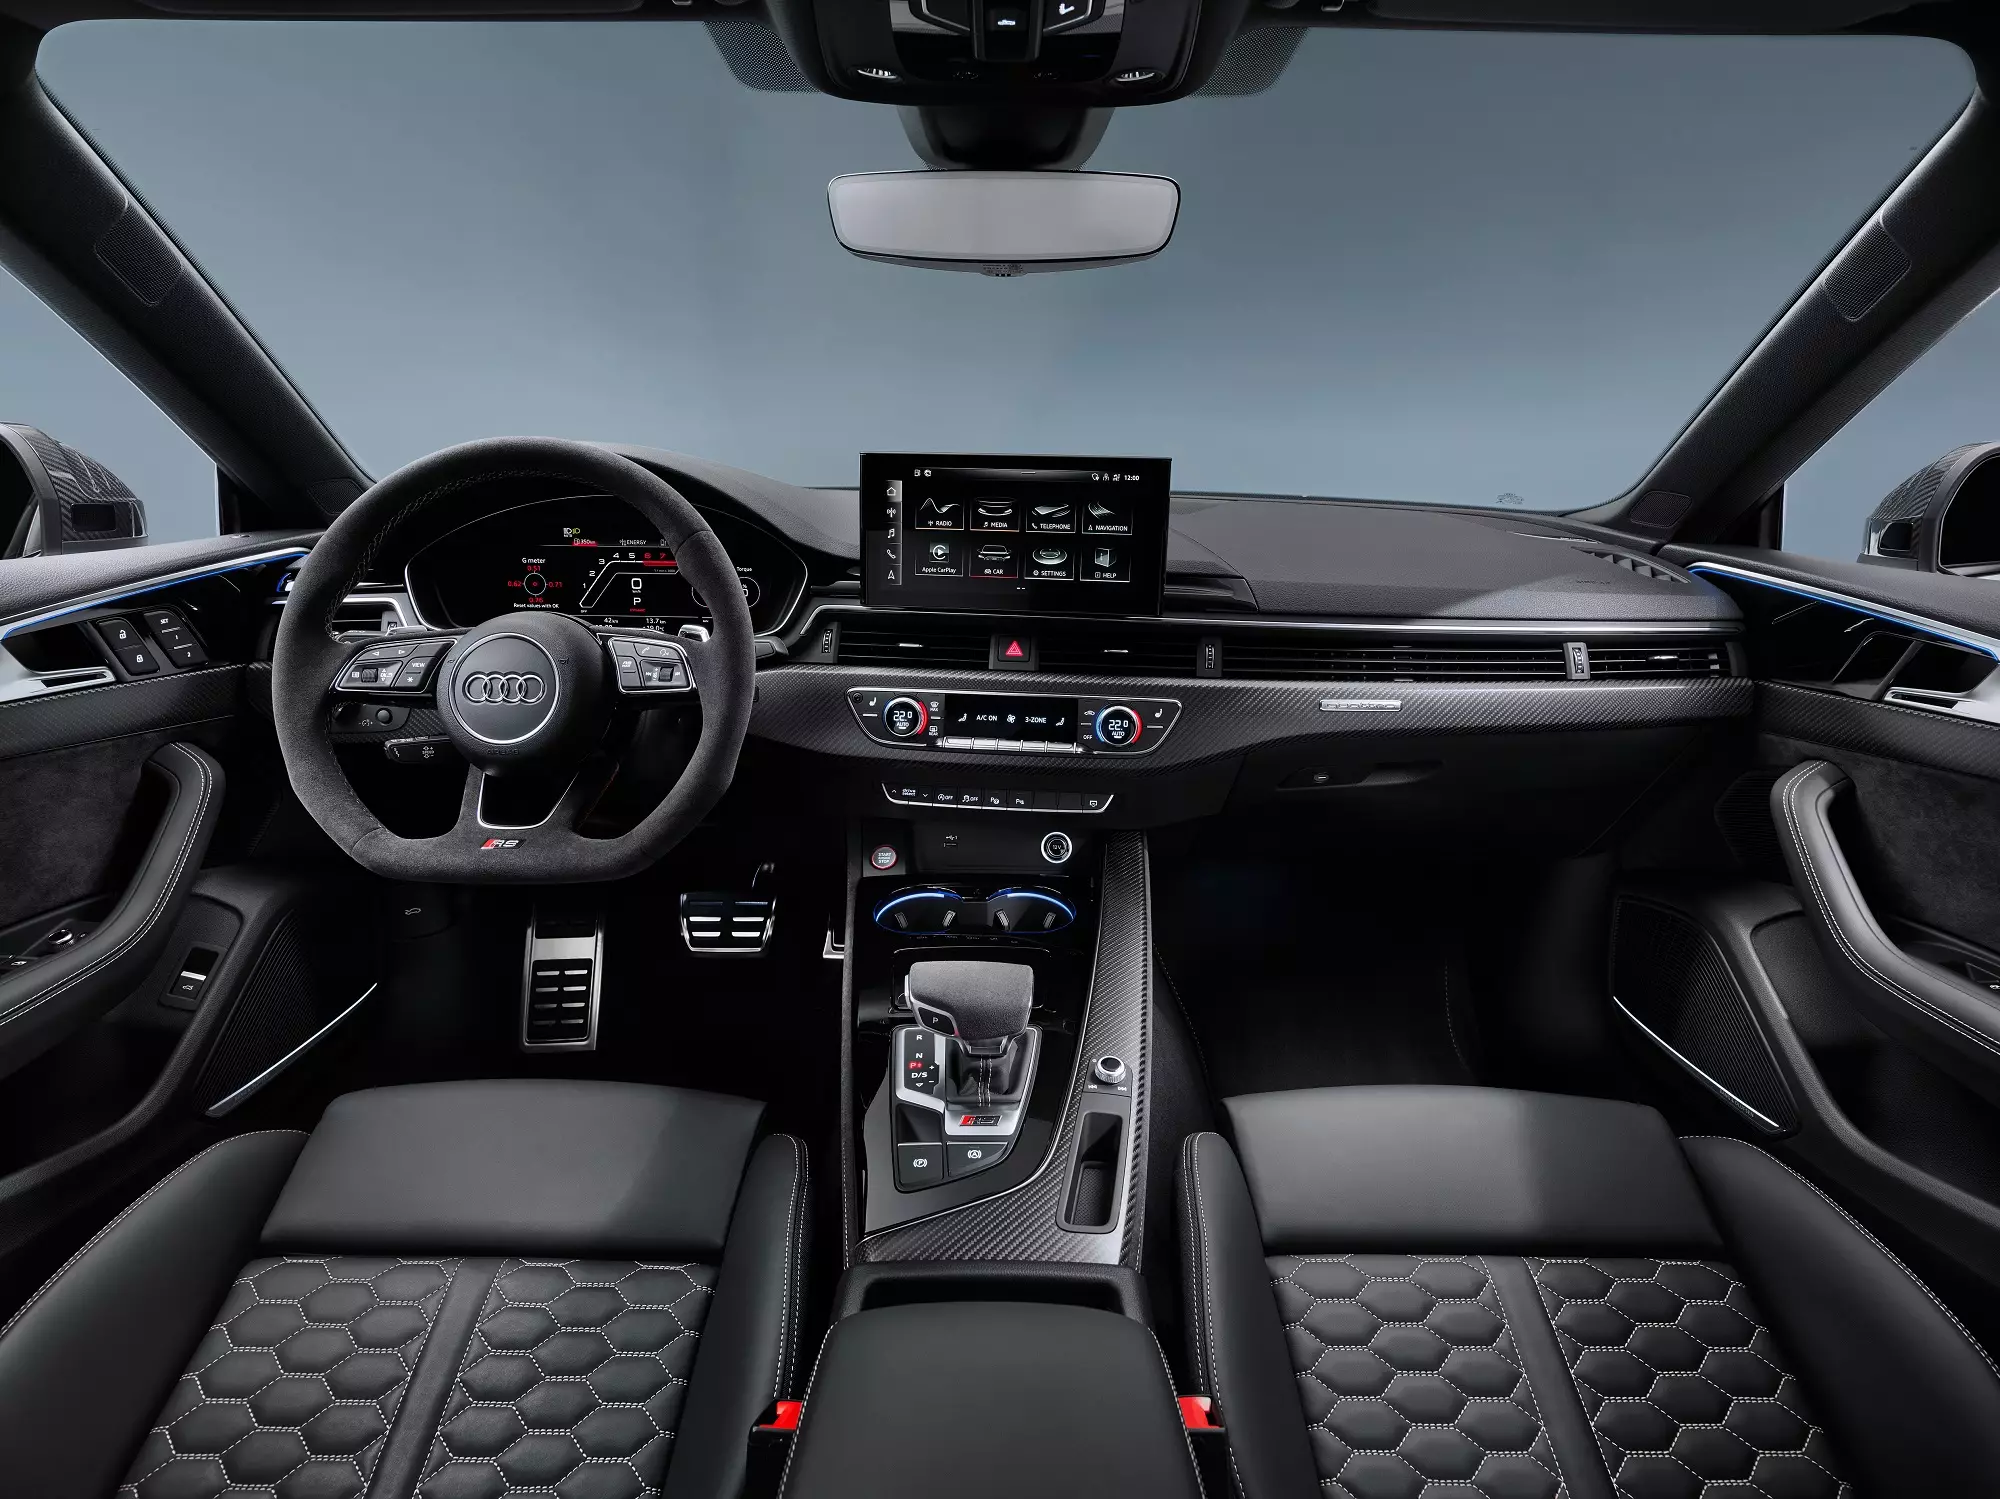 I-Audi RS 5 Coupe